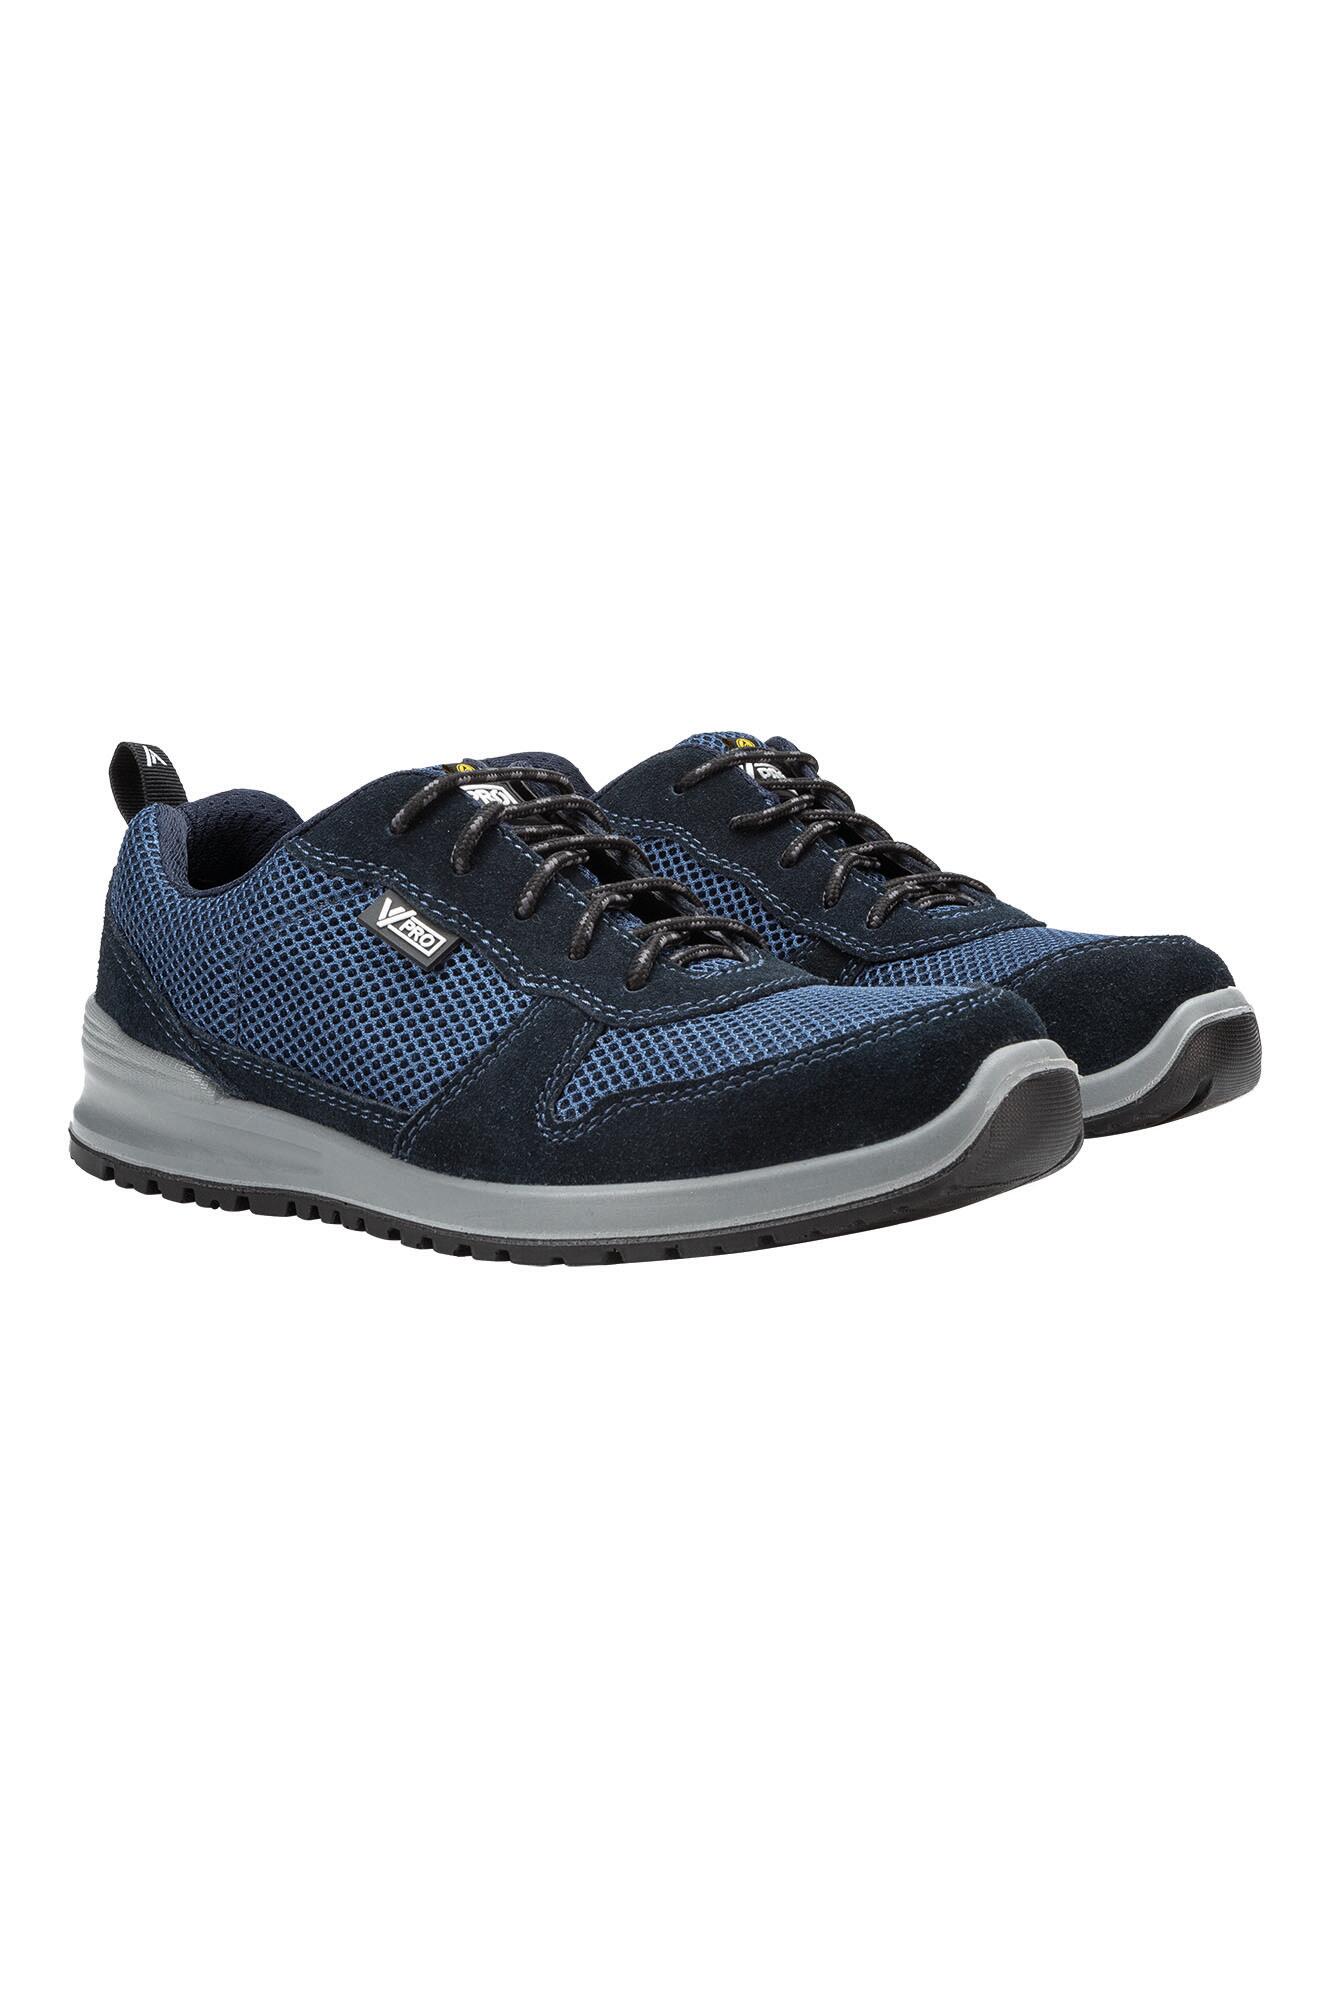 Zapatos de seguridad metal free s1psrc azul navy t41